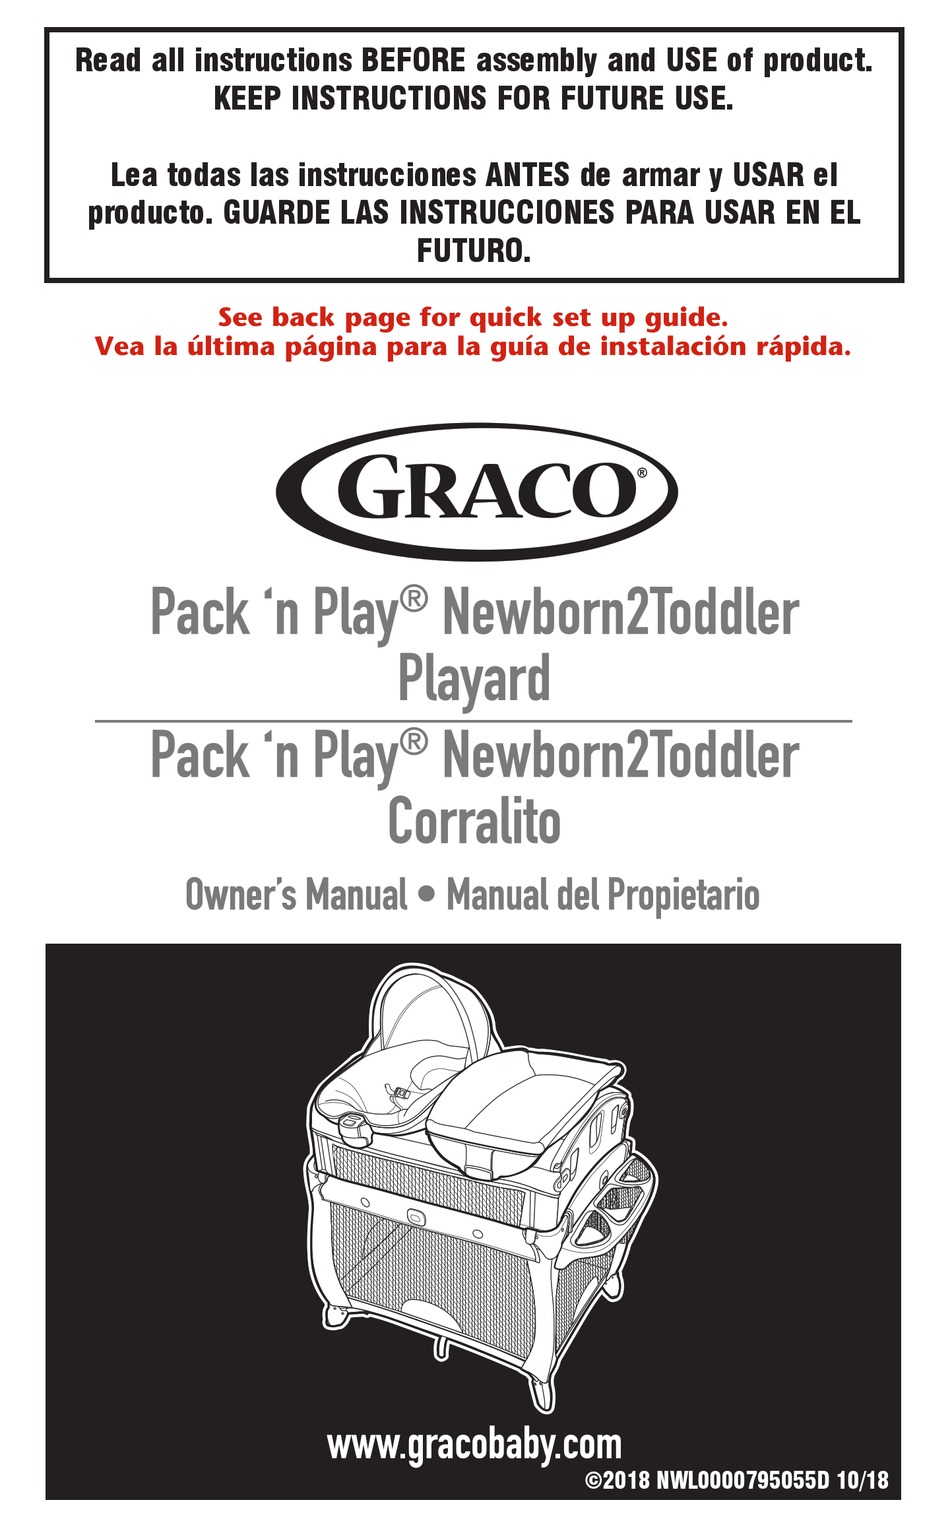 GRACO PACK 'N PLAY NEWBORN2TODDLER OWNER'S MANUAL Pdf